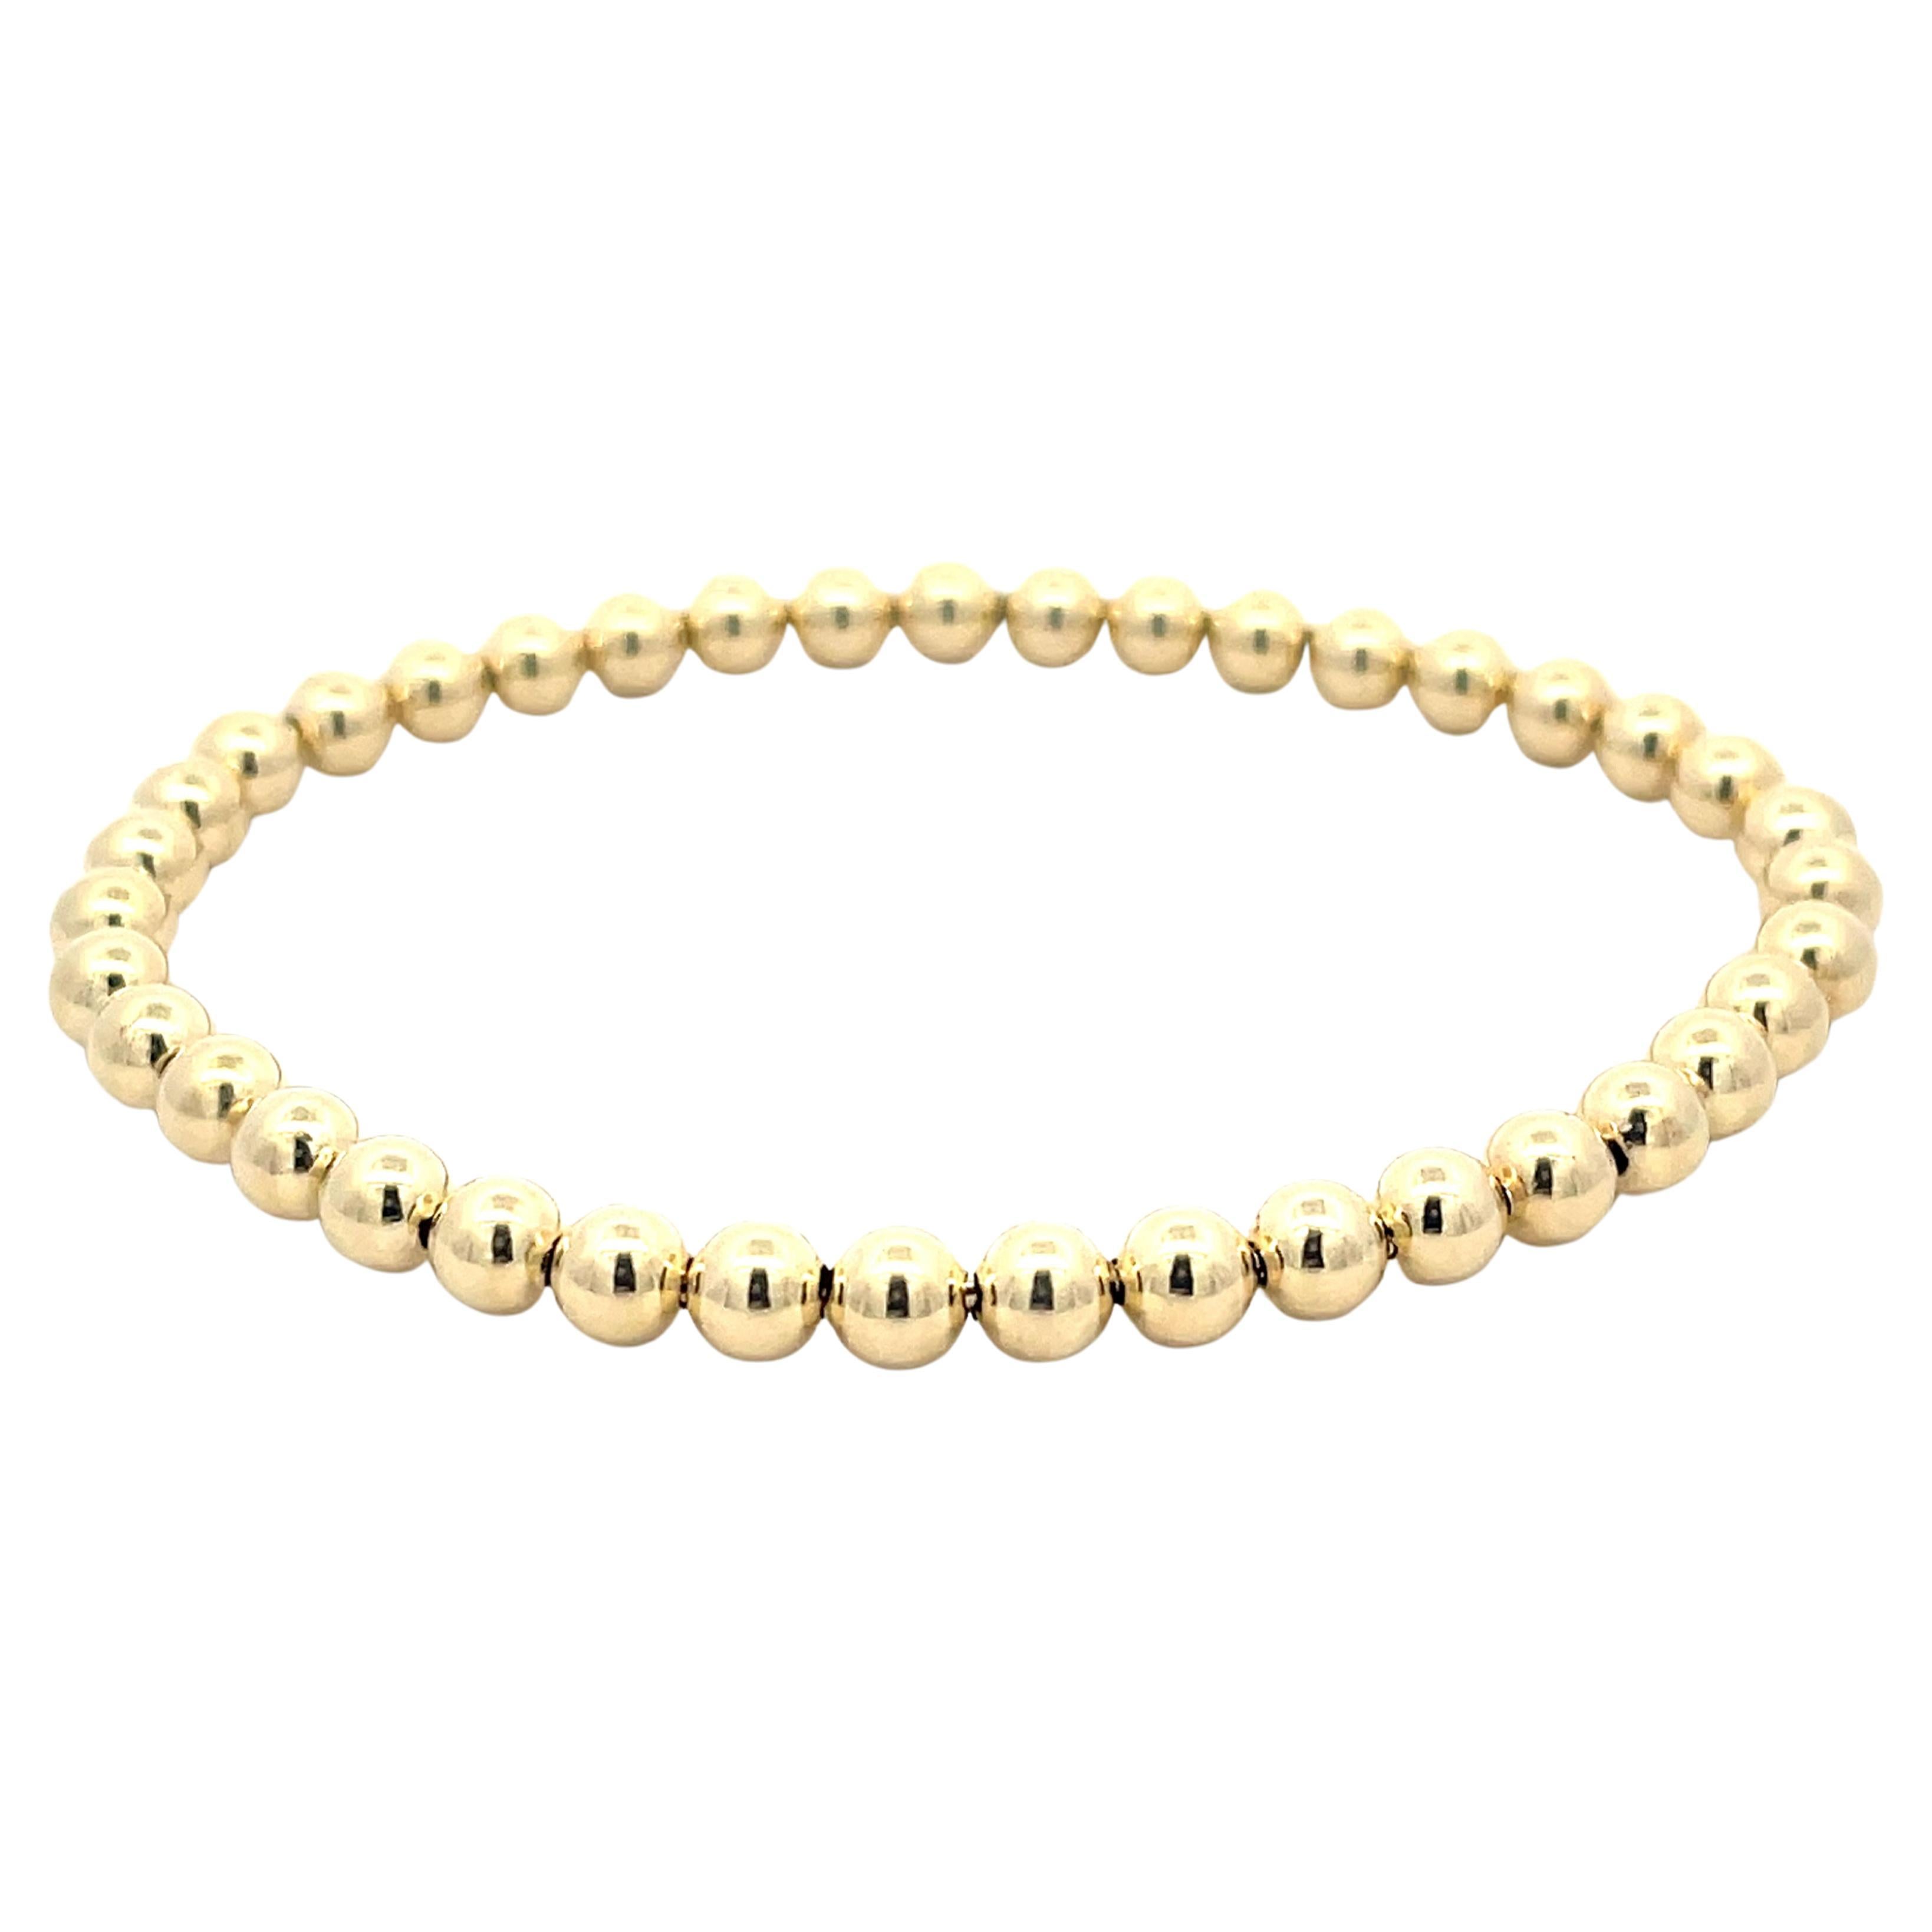 Bracelet classique de perles en or jaune 14 carats de 5 mm